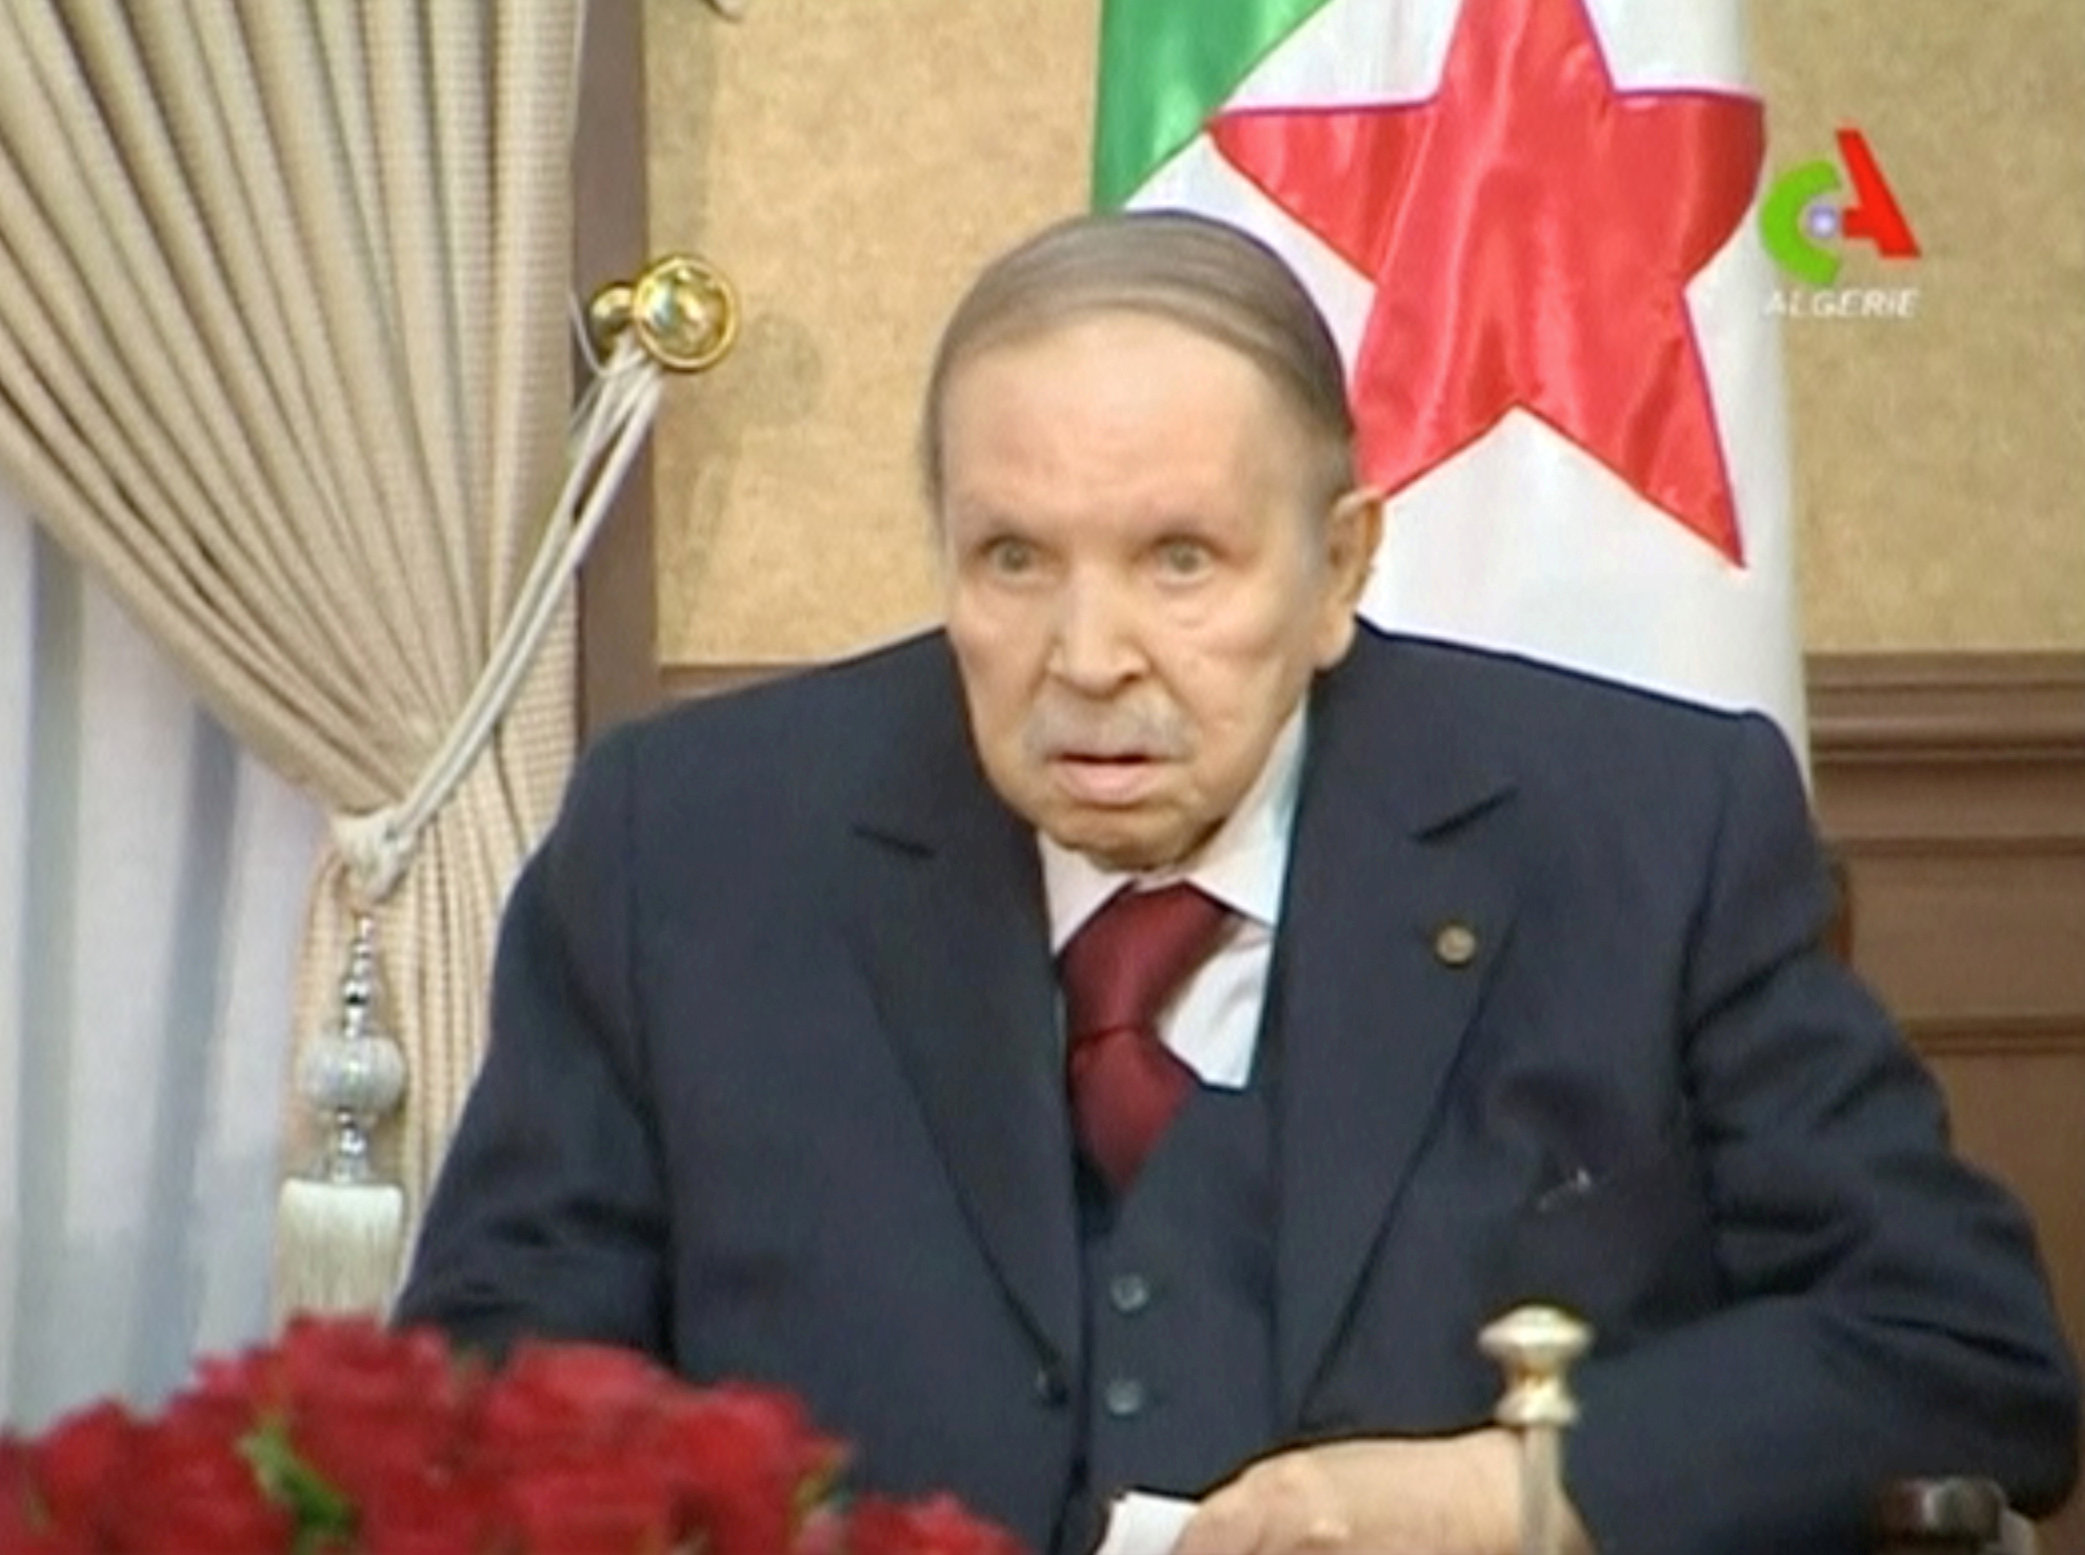 President Abdelaziz Bouteflika gestures during a swearing-in ceremony in Algiers